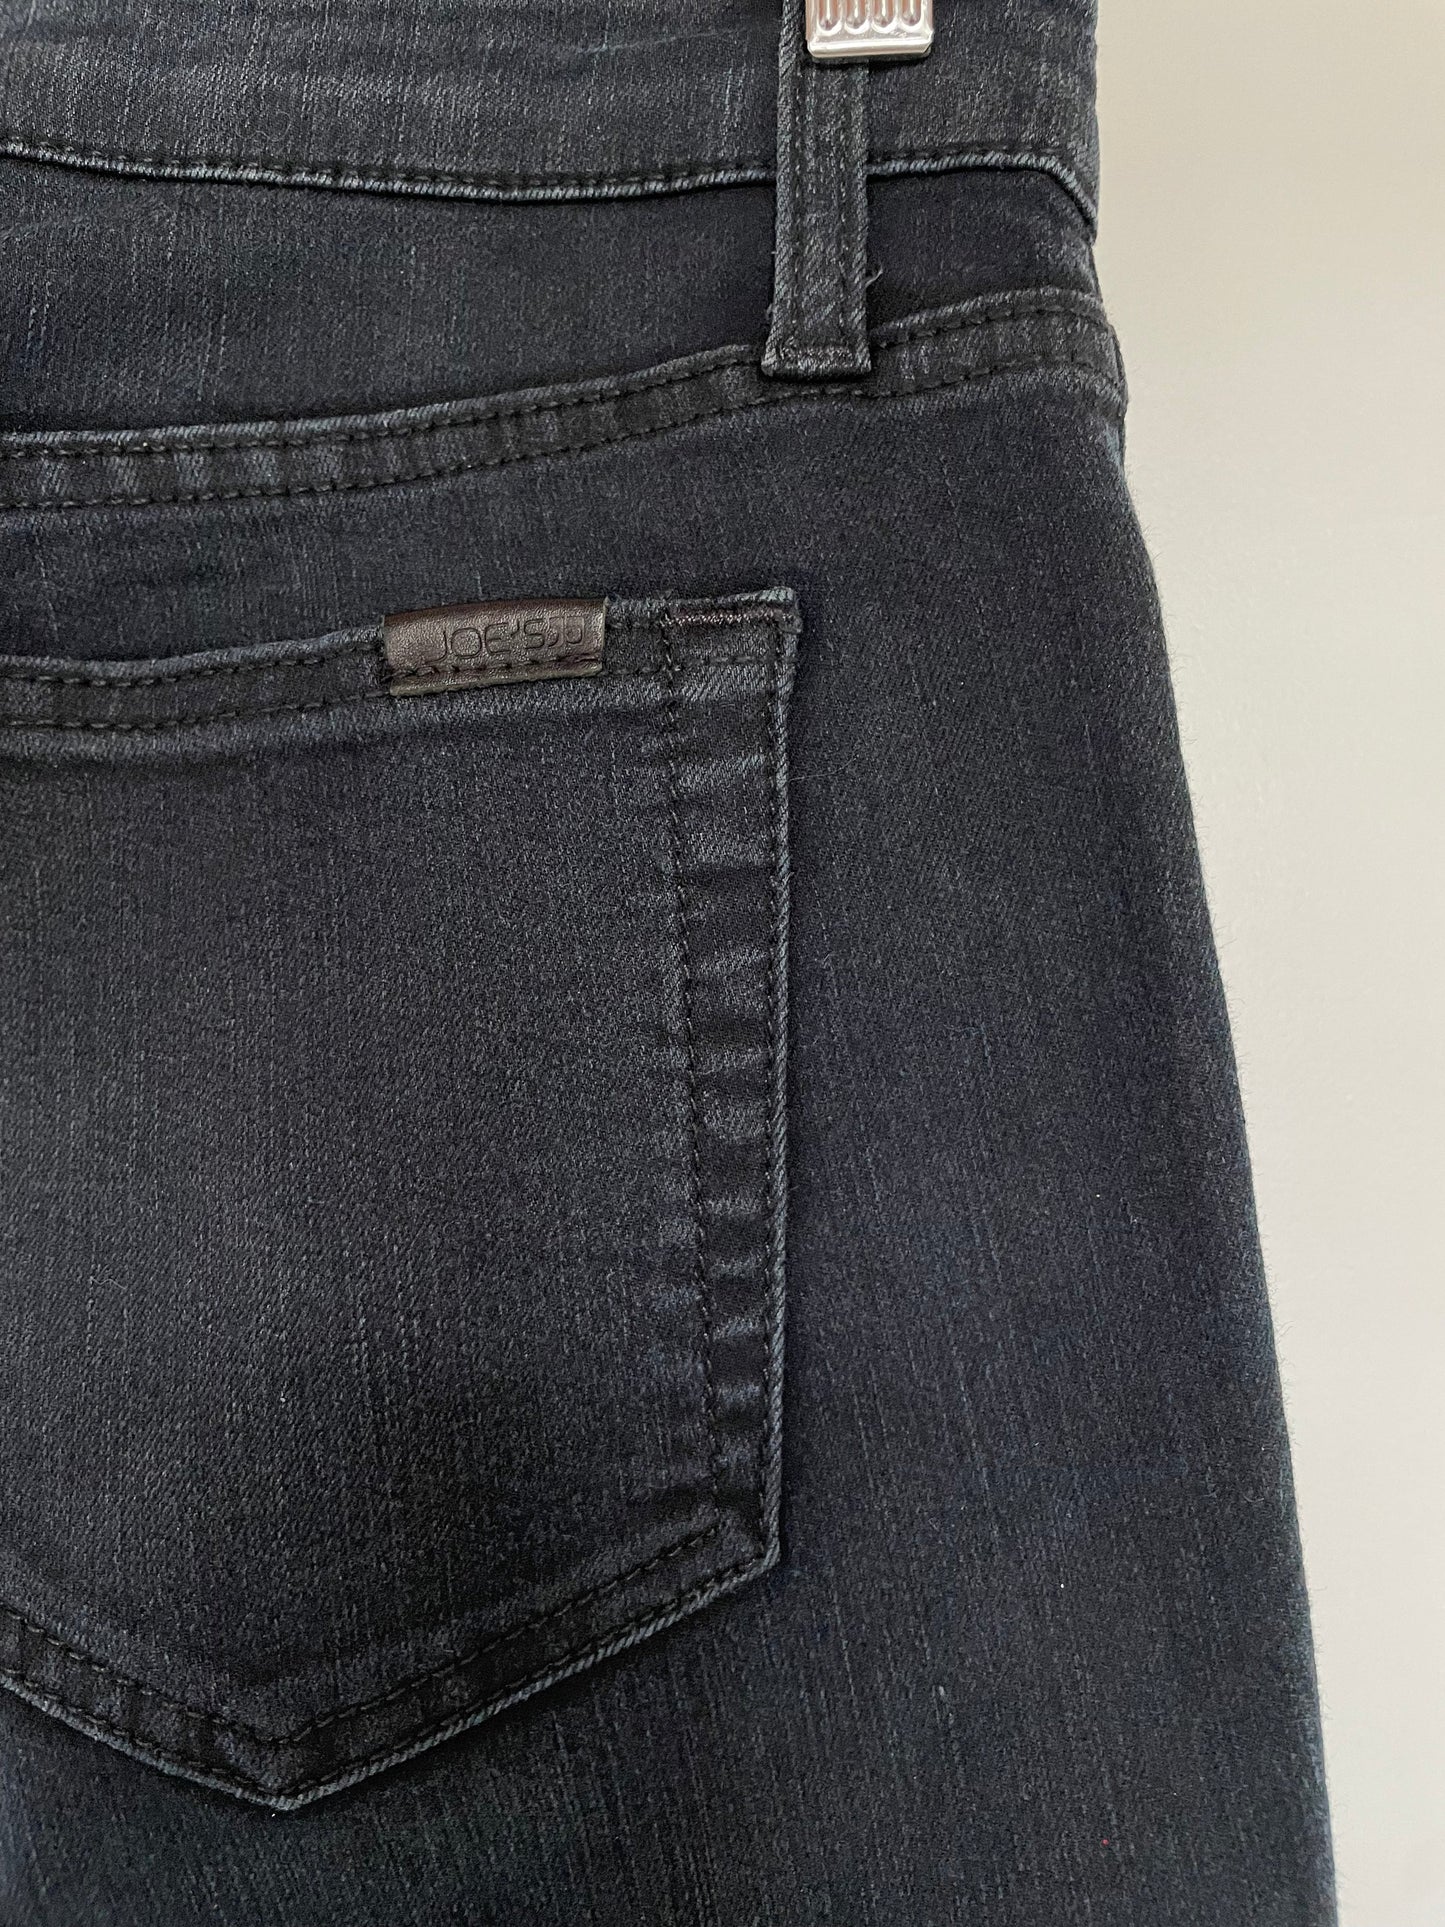 Joe's Skinny jeans high rise | maat 29 - Meisje met de parels